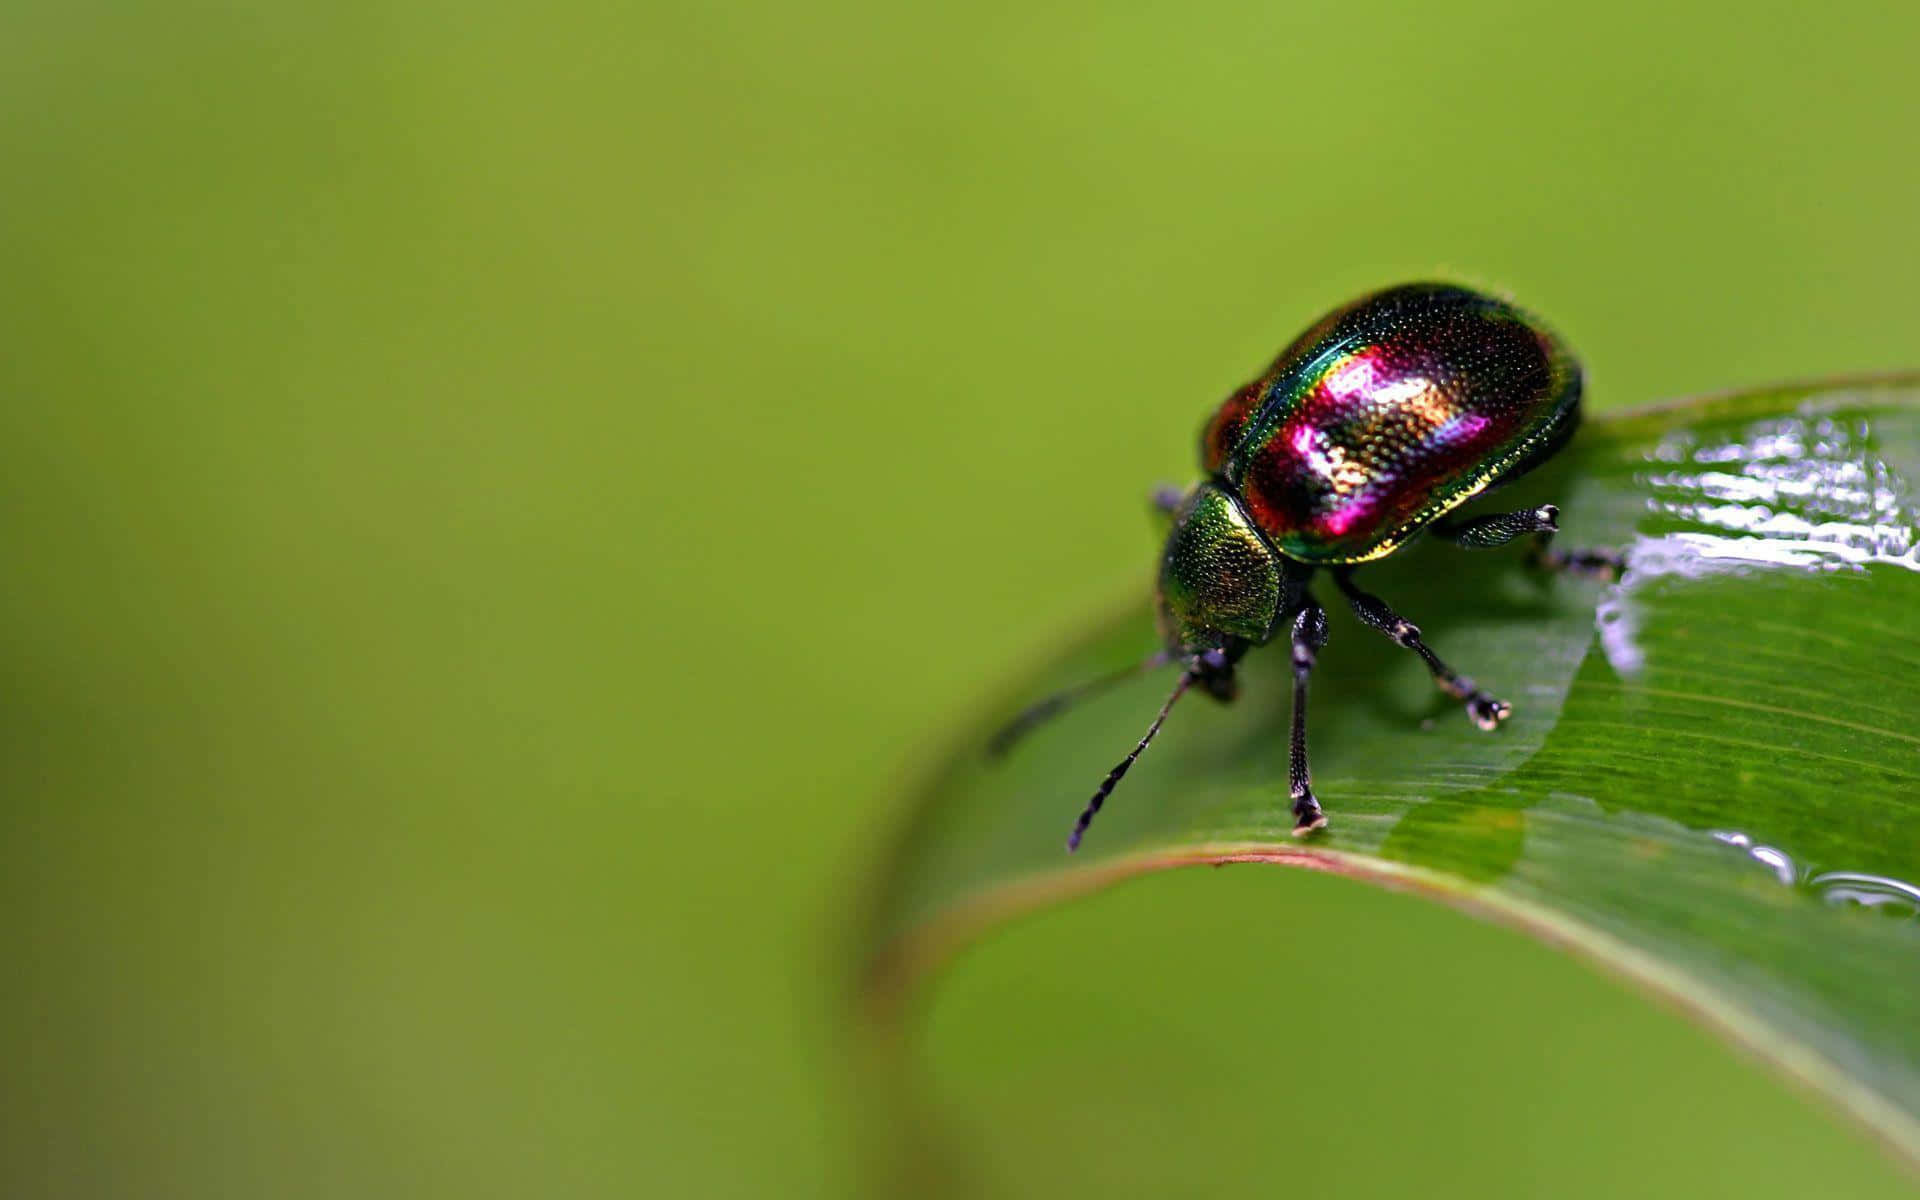 A Beetle On A Leaf